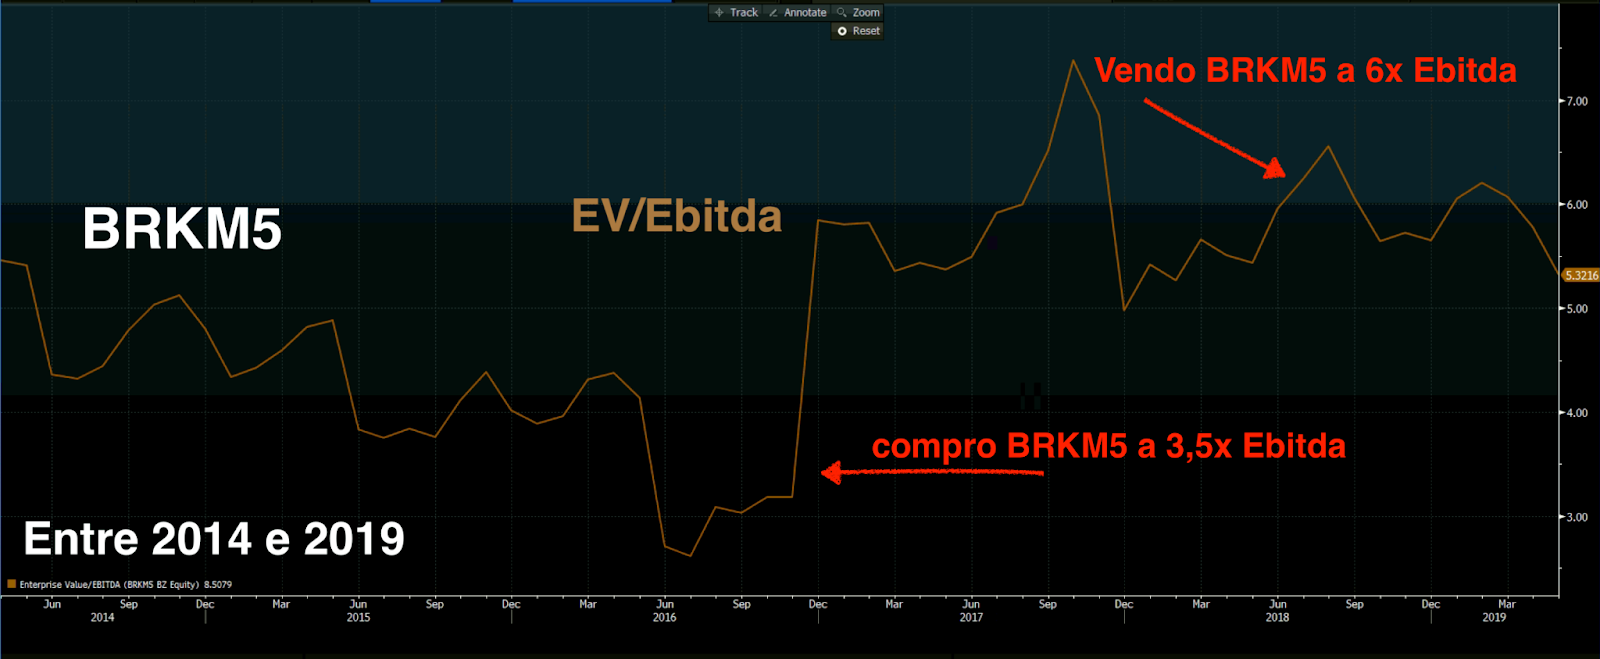 EV/Ebitda de BRKM5 (Fonte: Bloomberg)